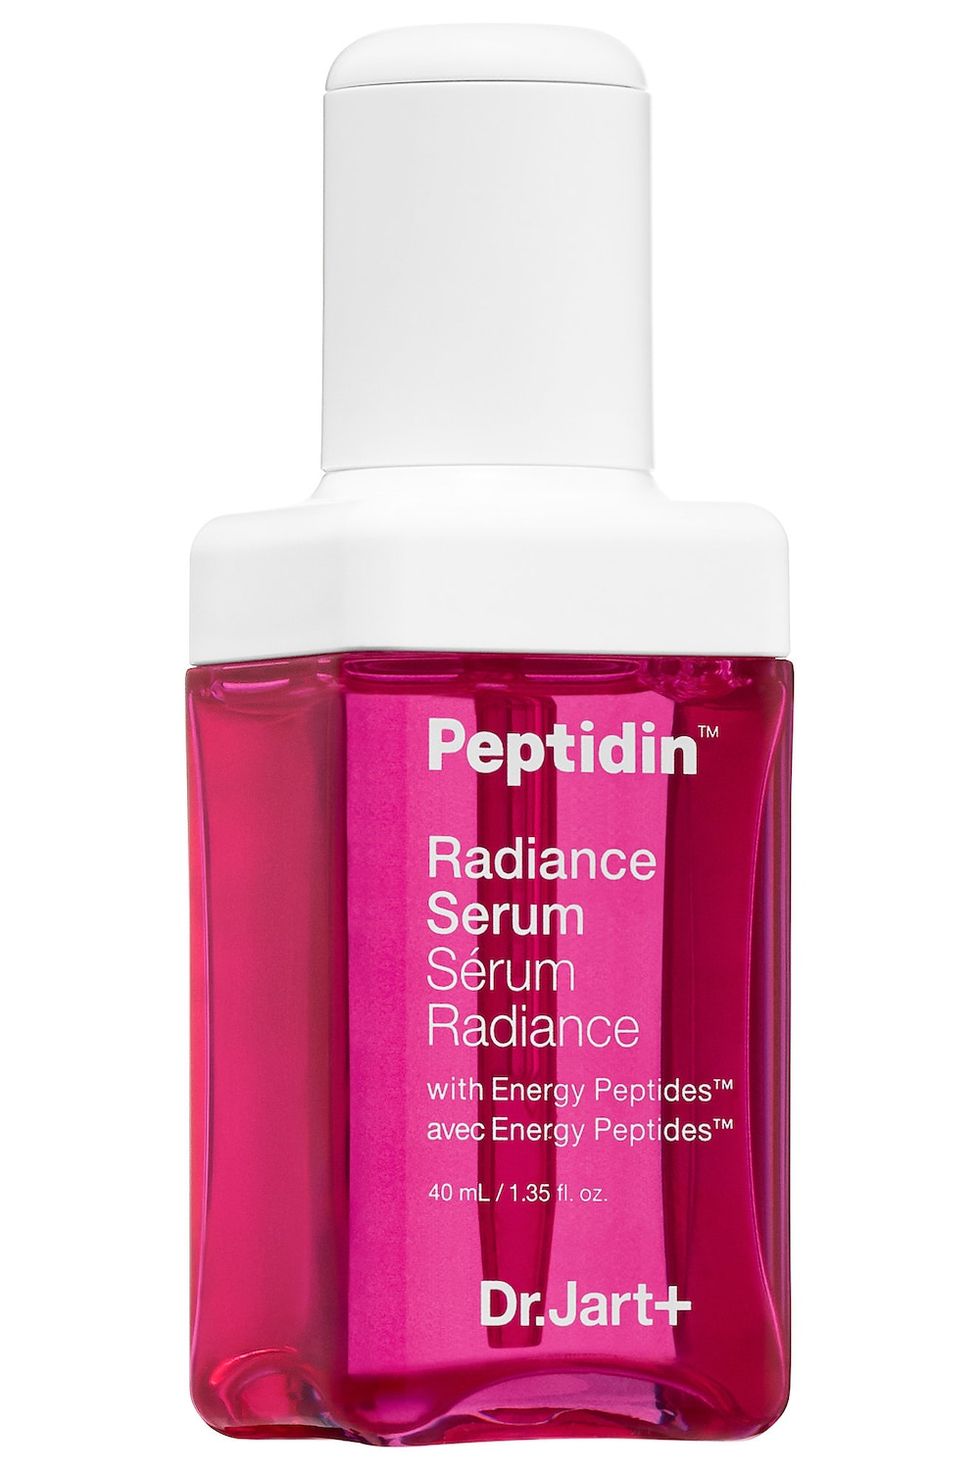 Peptidin Radiance Serum with Energy Peptides